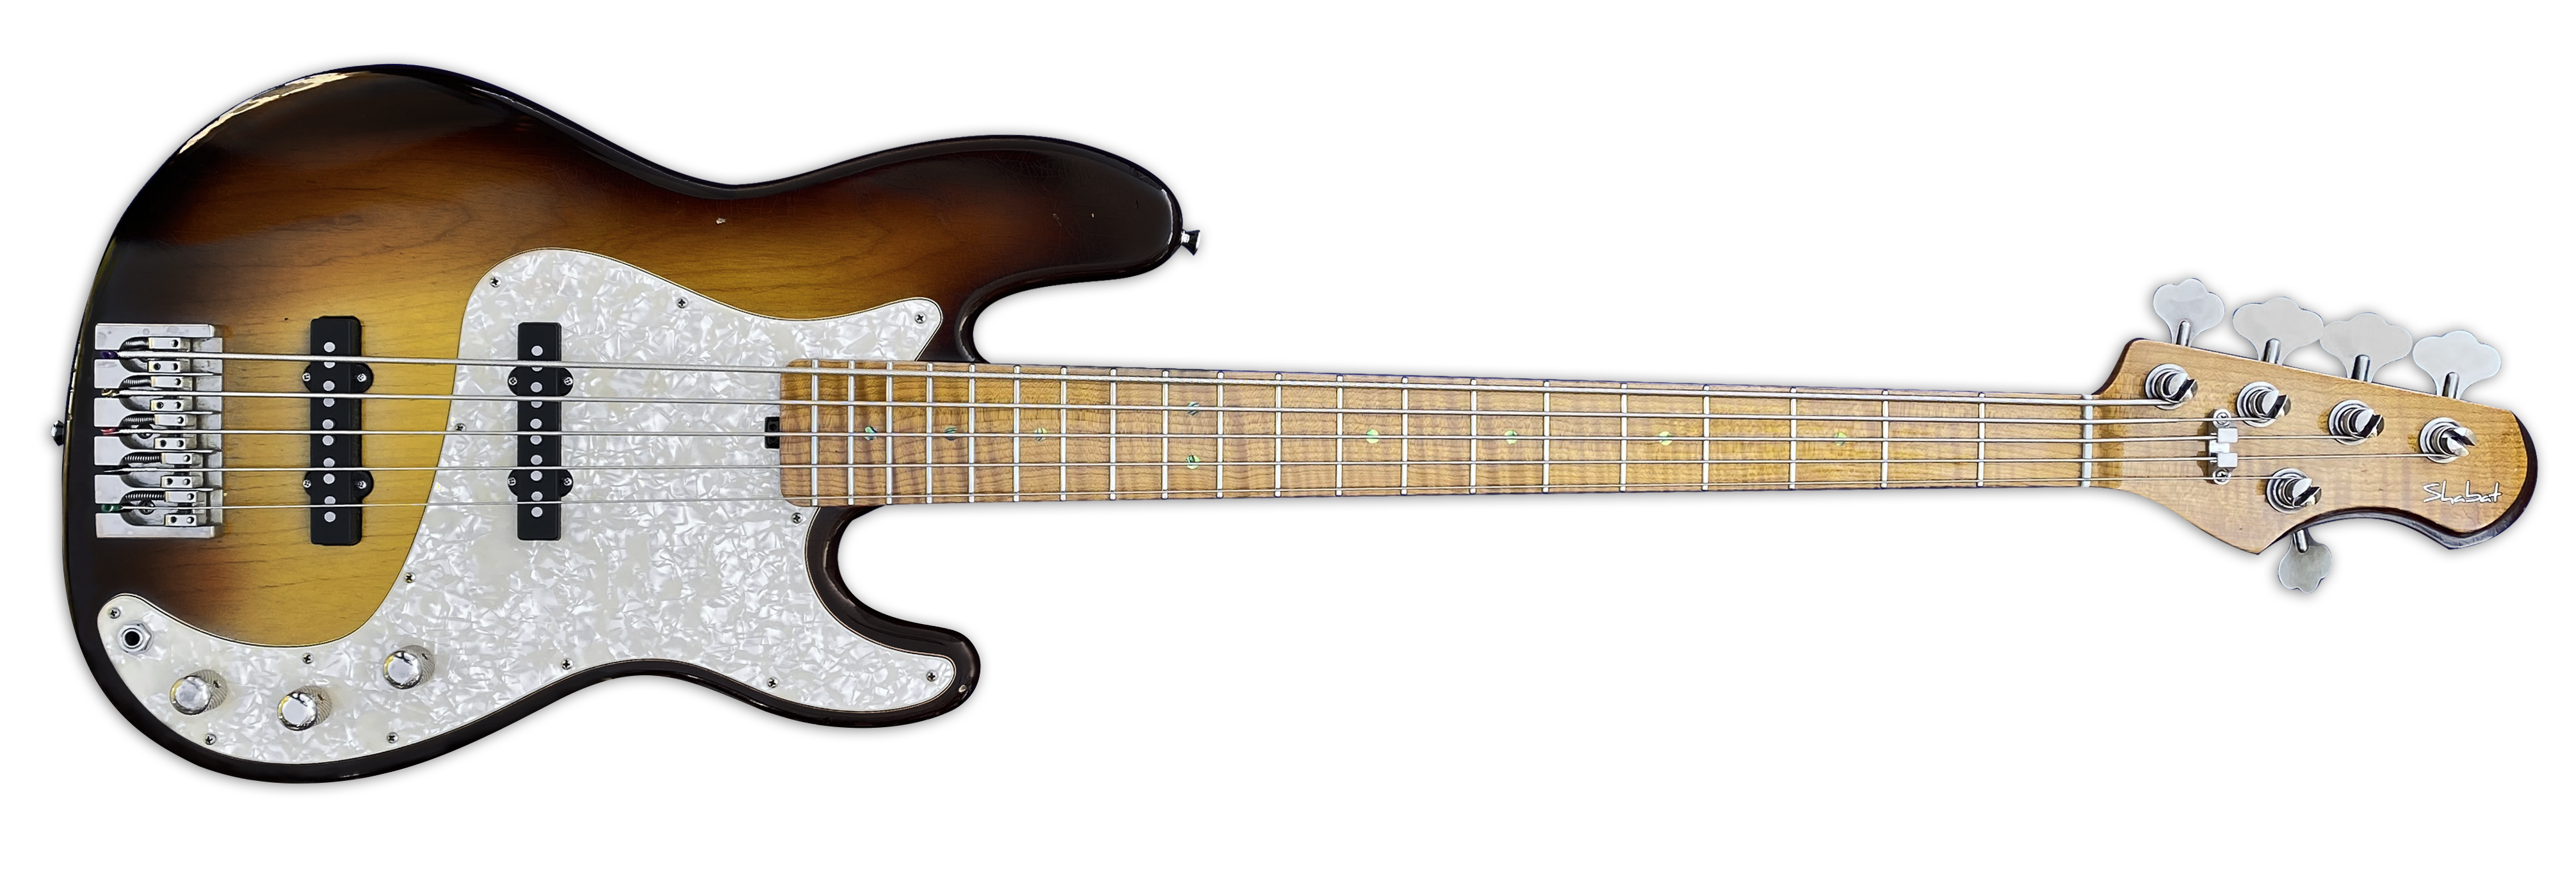 Shabat Tiger5 Custom Electric Bass Guitar